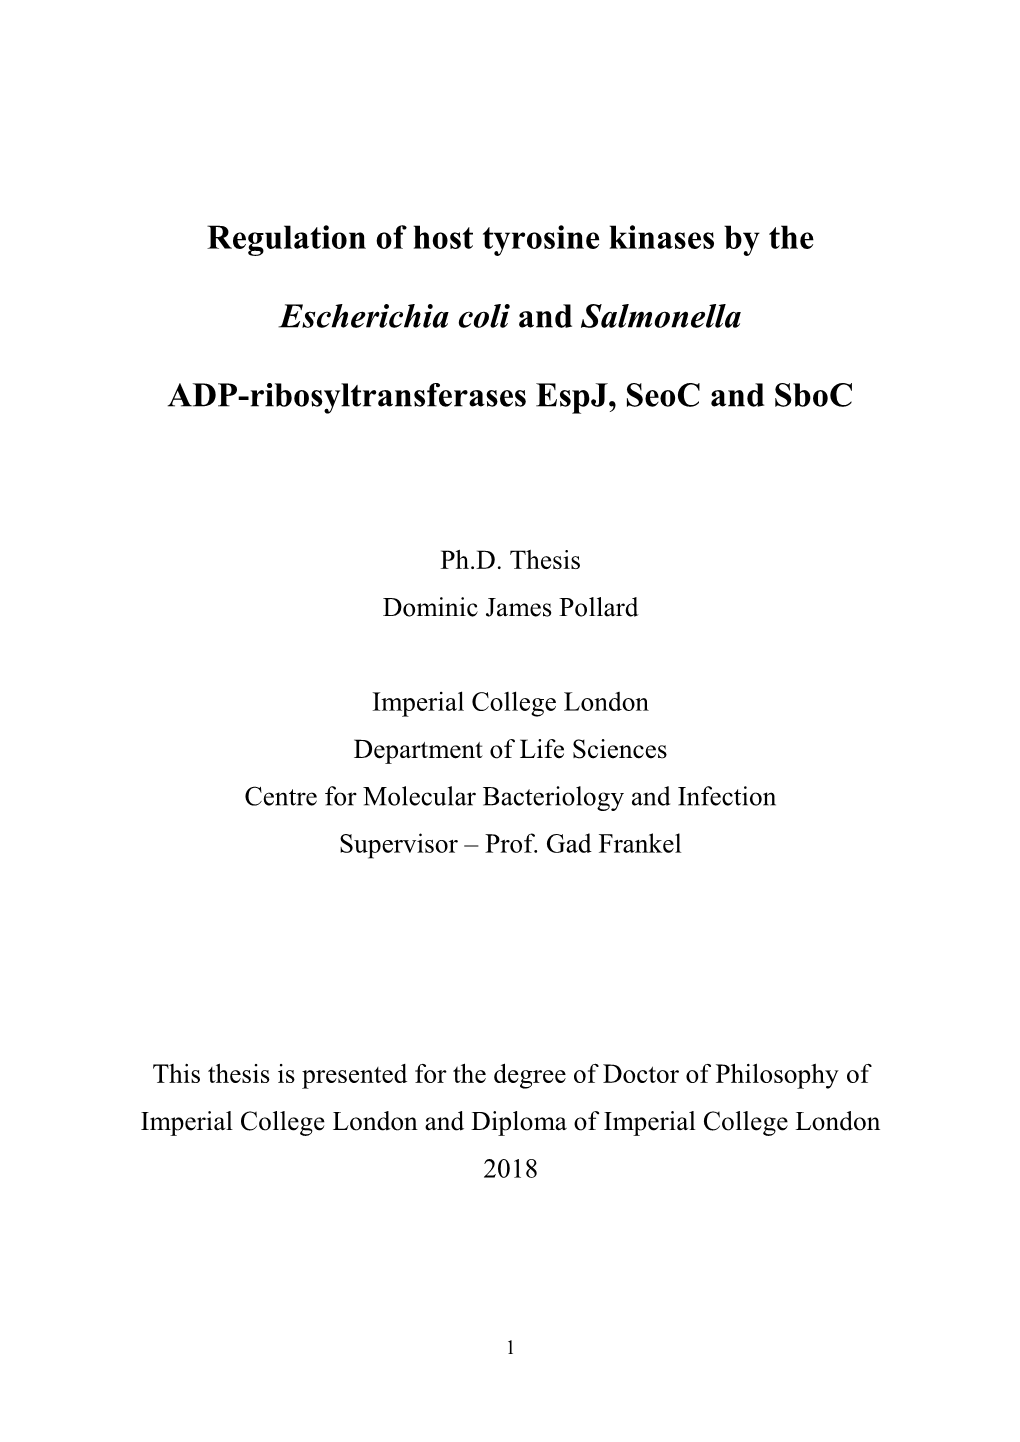 Regulation of Host Tyrosine Kinases by the Escherichia Coli and Salmonella